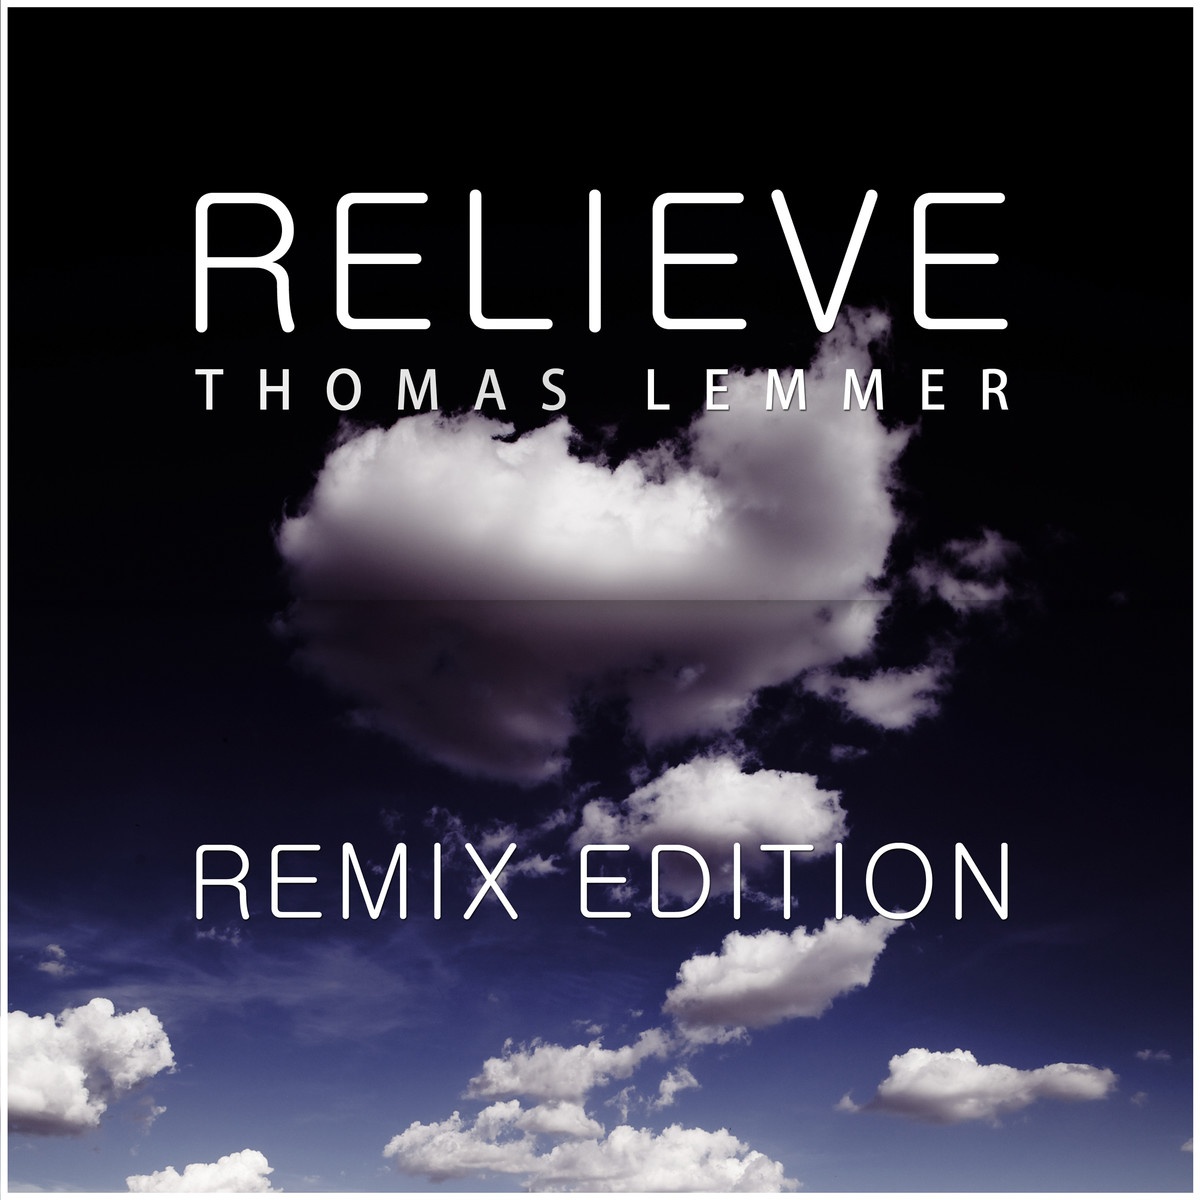 Relieve Remix Edition Continuous Mix